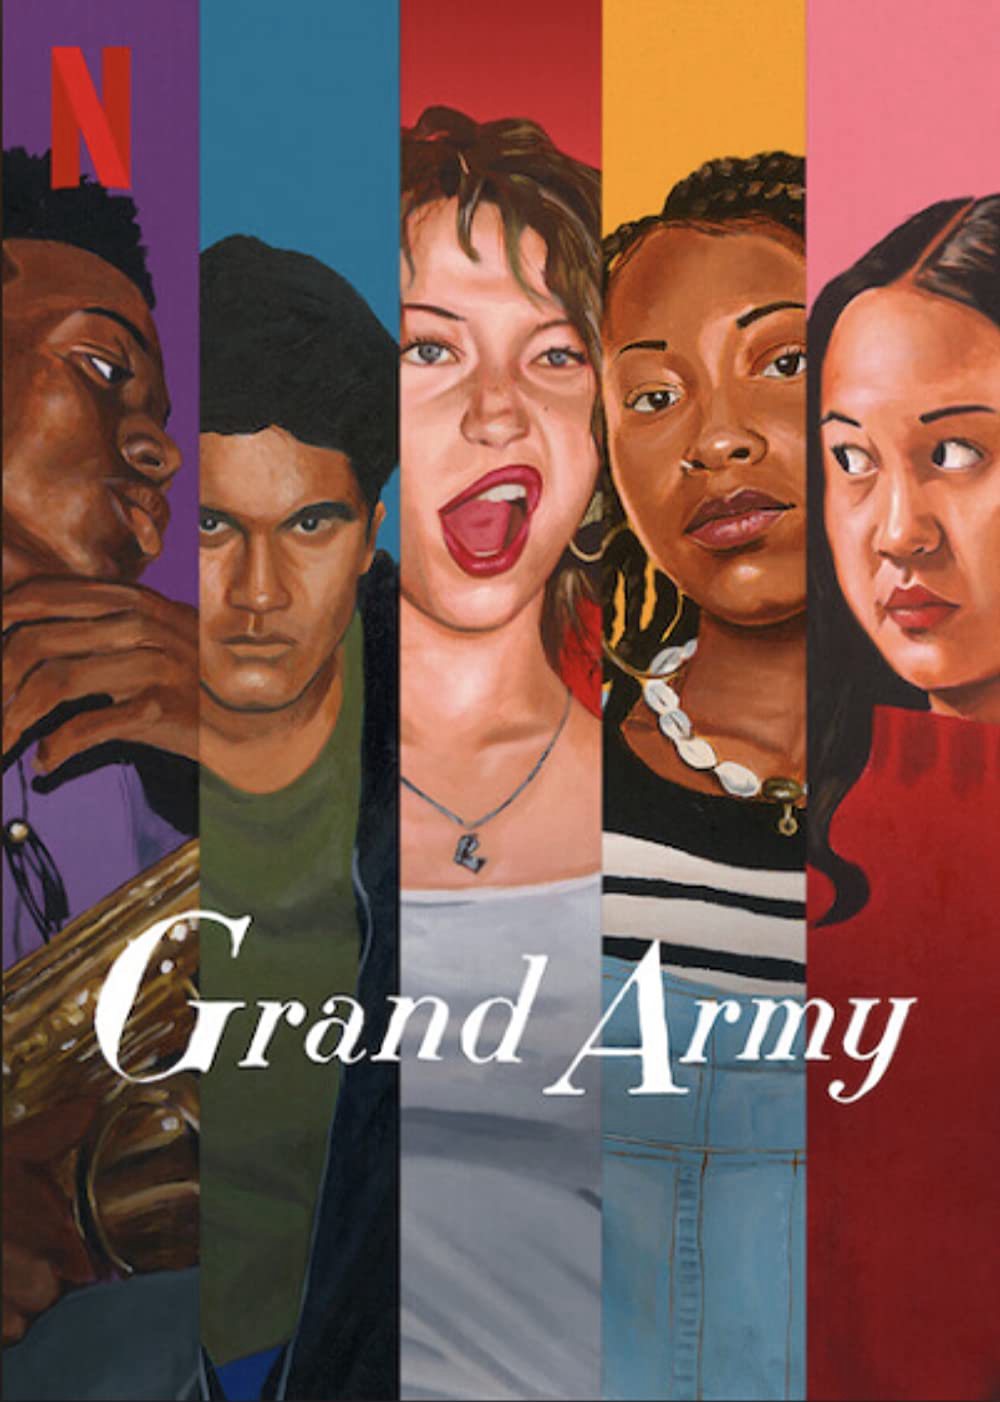 Grand Army - Grand Army